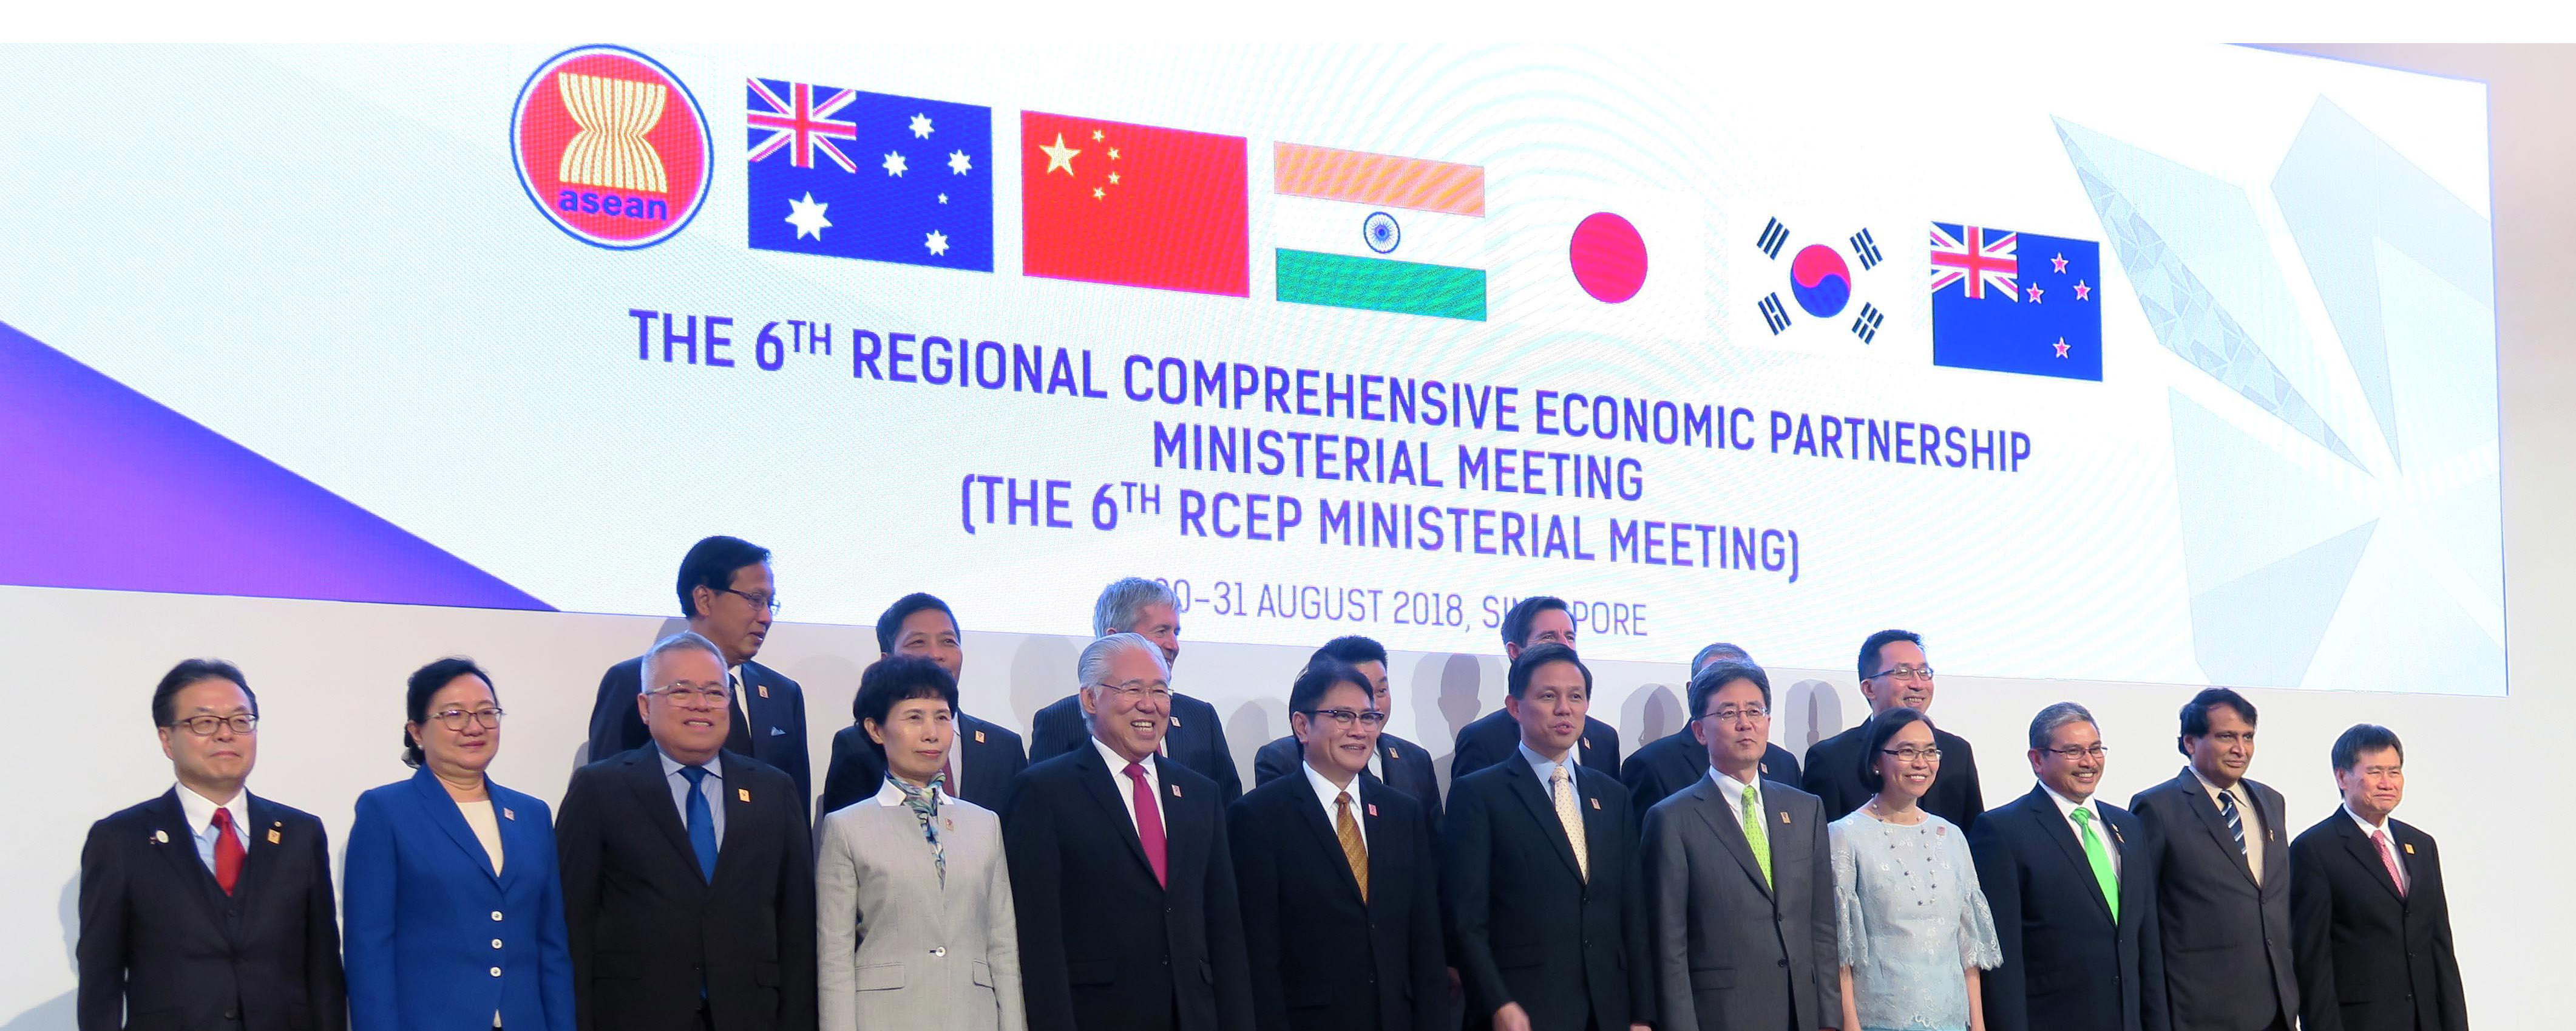 The Regional Comprehensive Economic Partnership (R